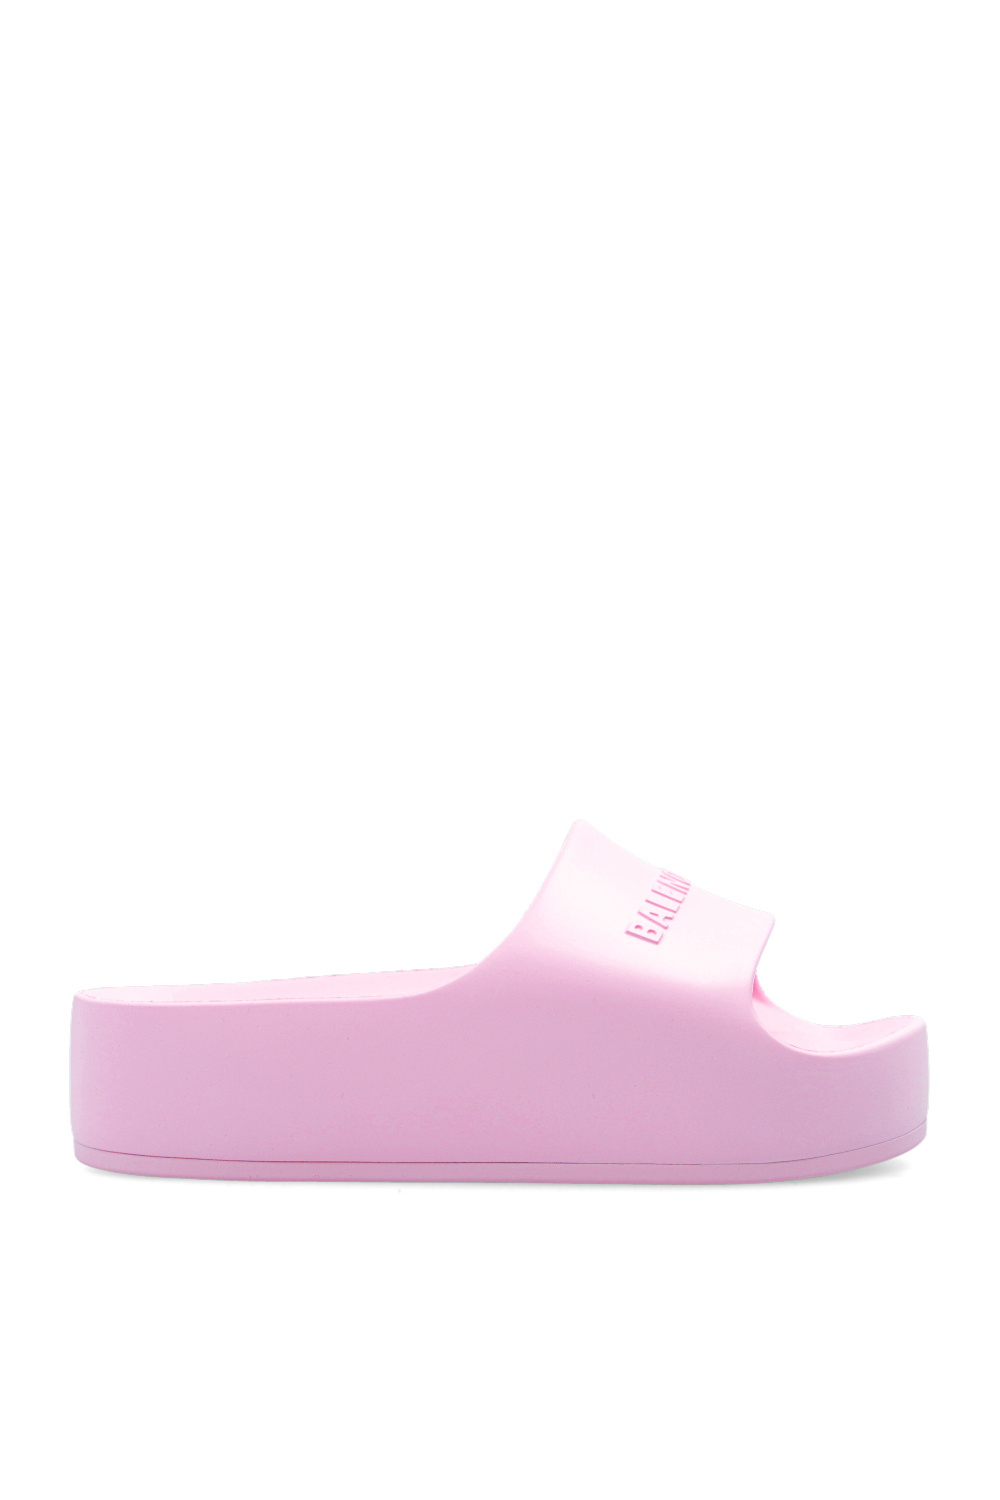 Balenciaga Wmns Pool Slides Light Pink  GLABVN